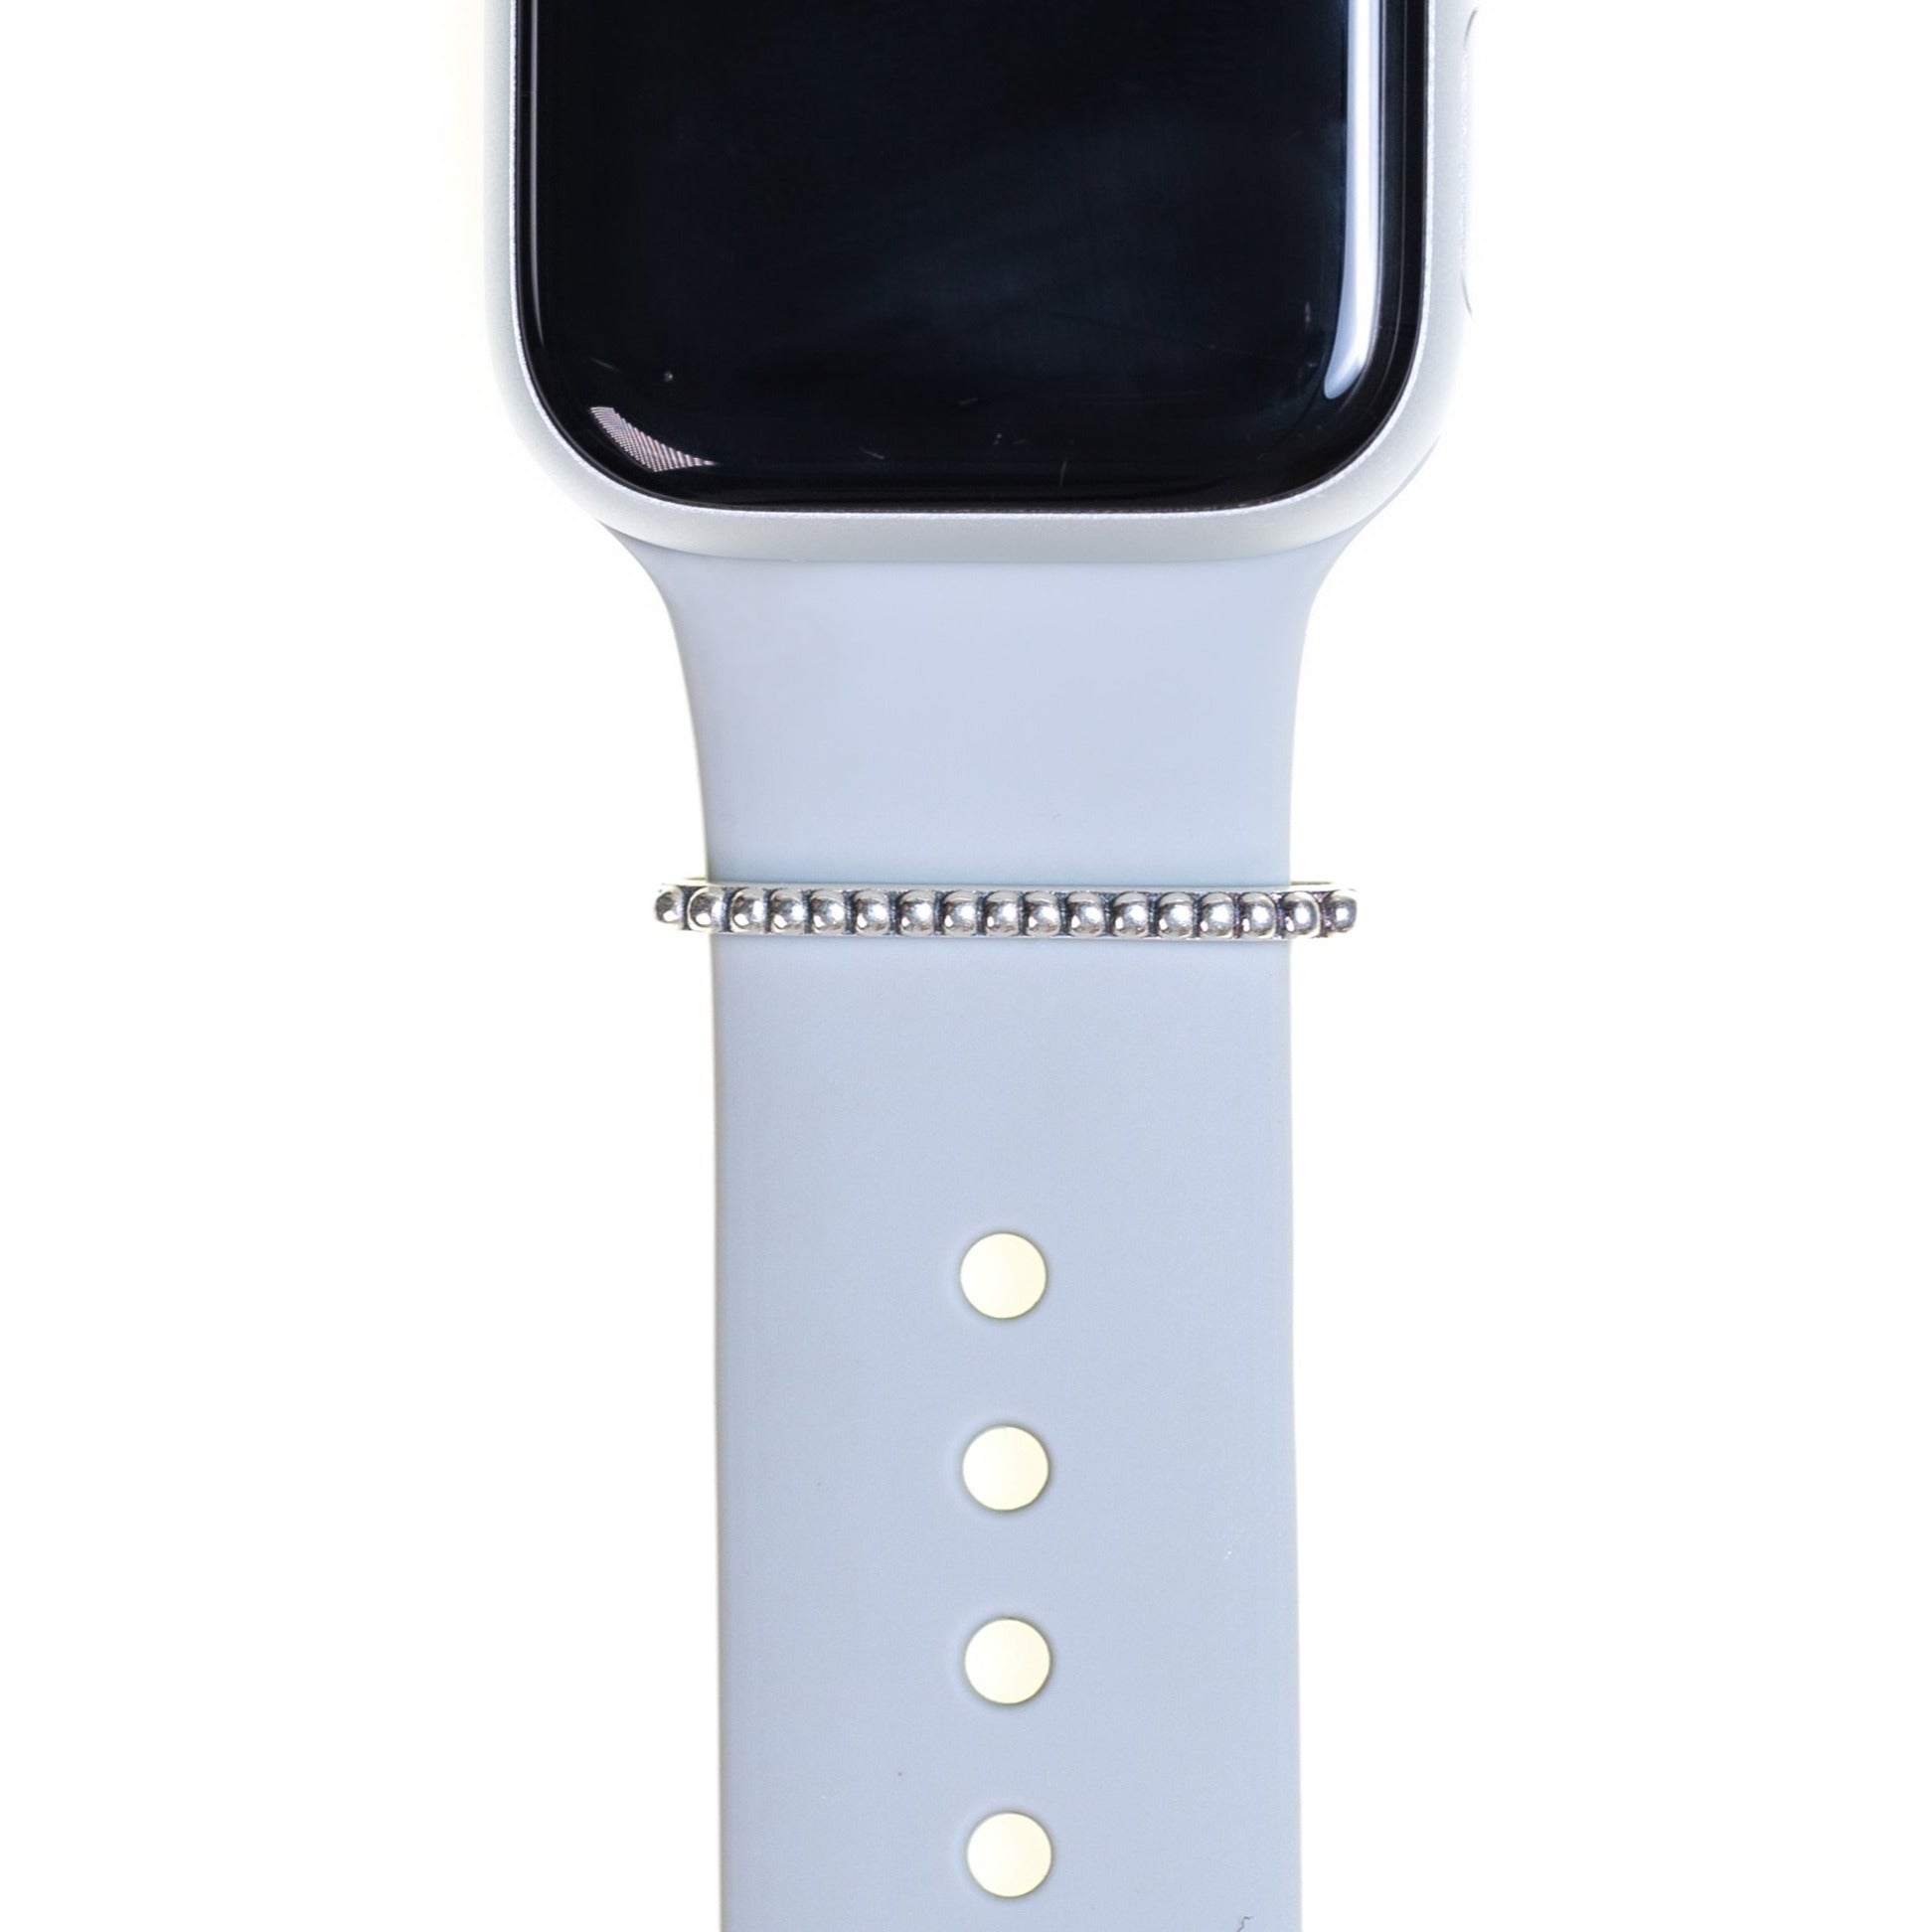 Circles • Apple Watch Band's Charm